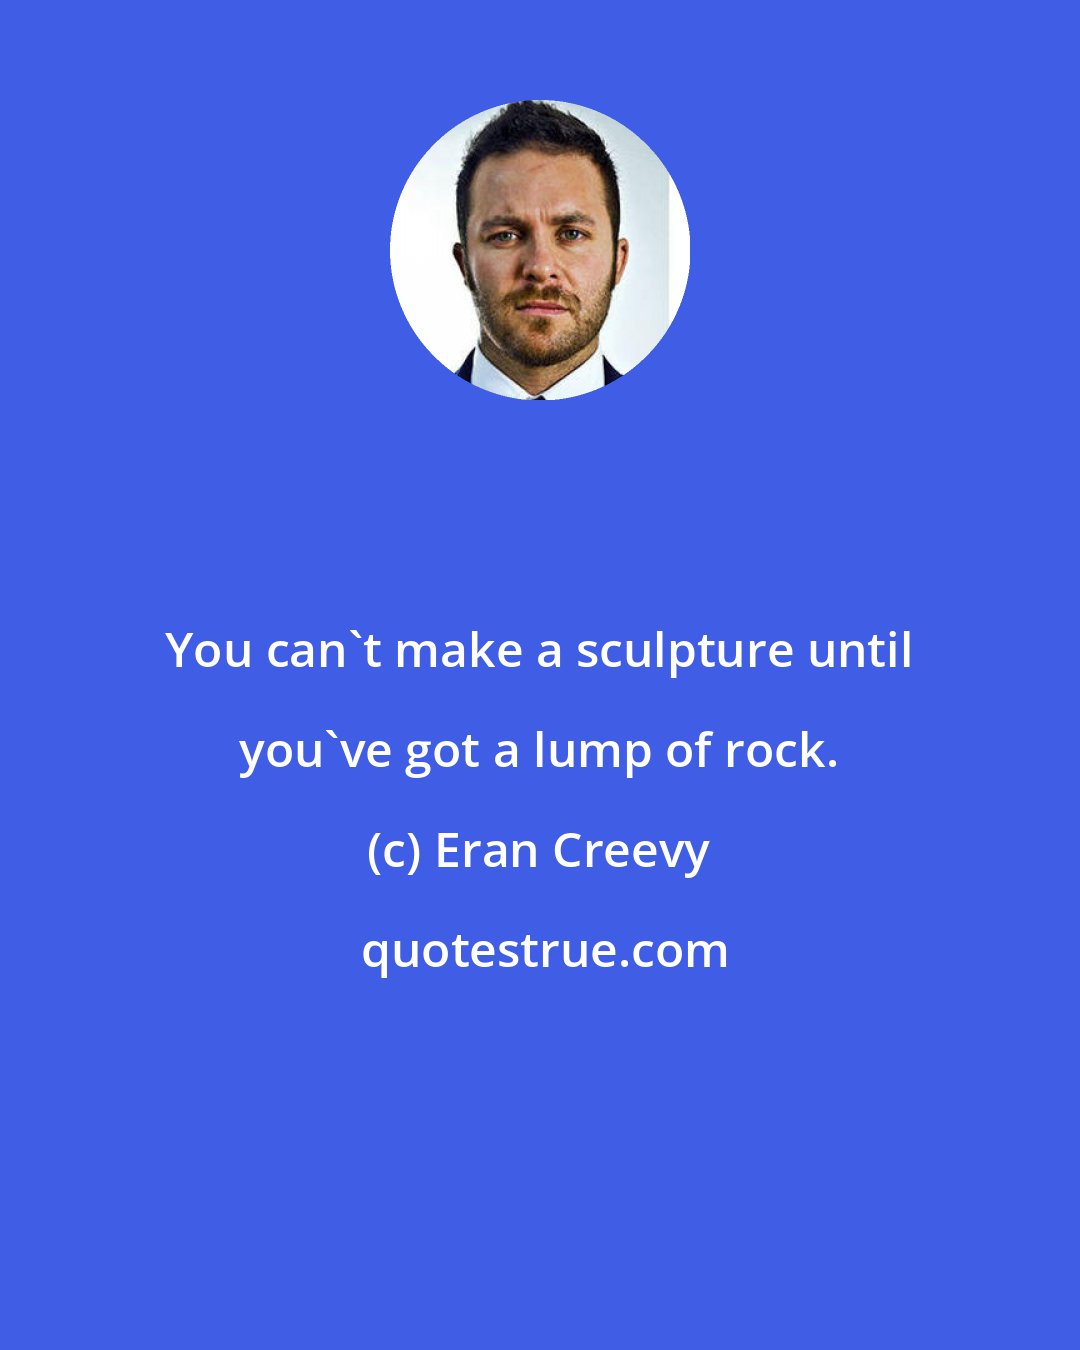 Eran Creevy: You can't make a sculpture until you've got a lump of rock.